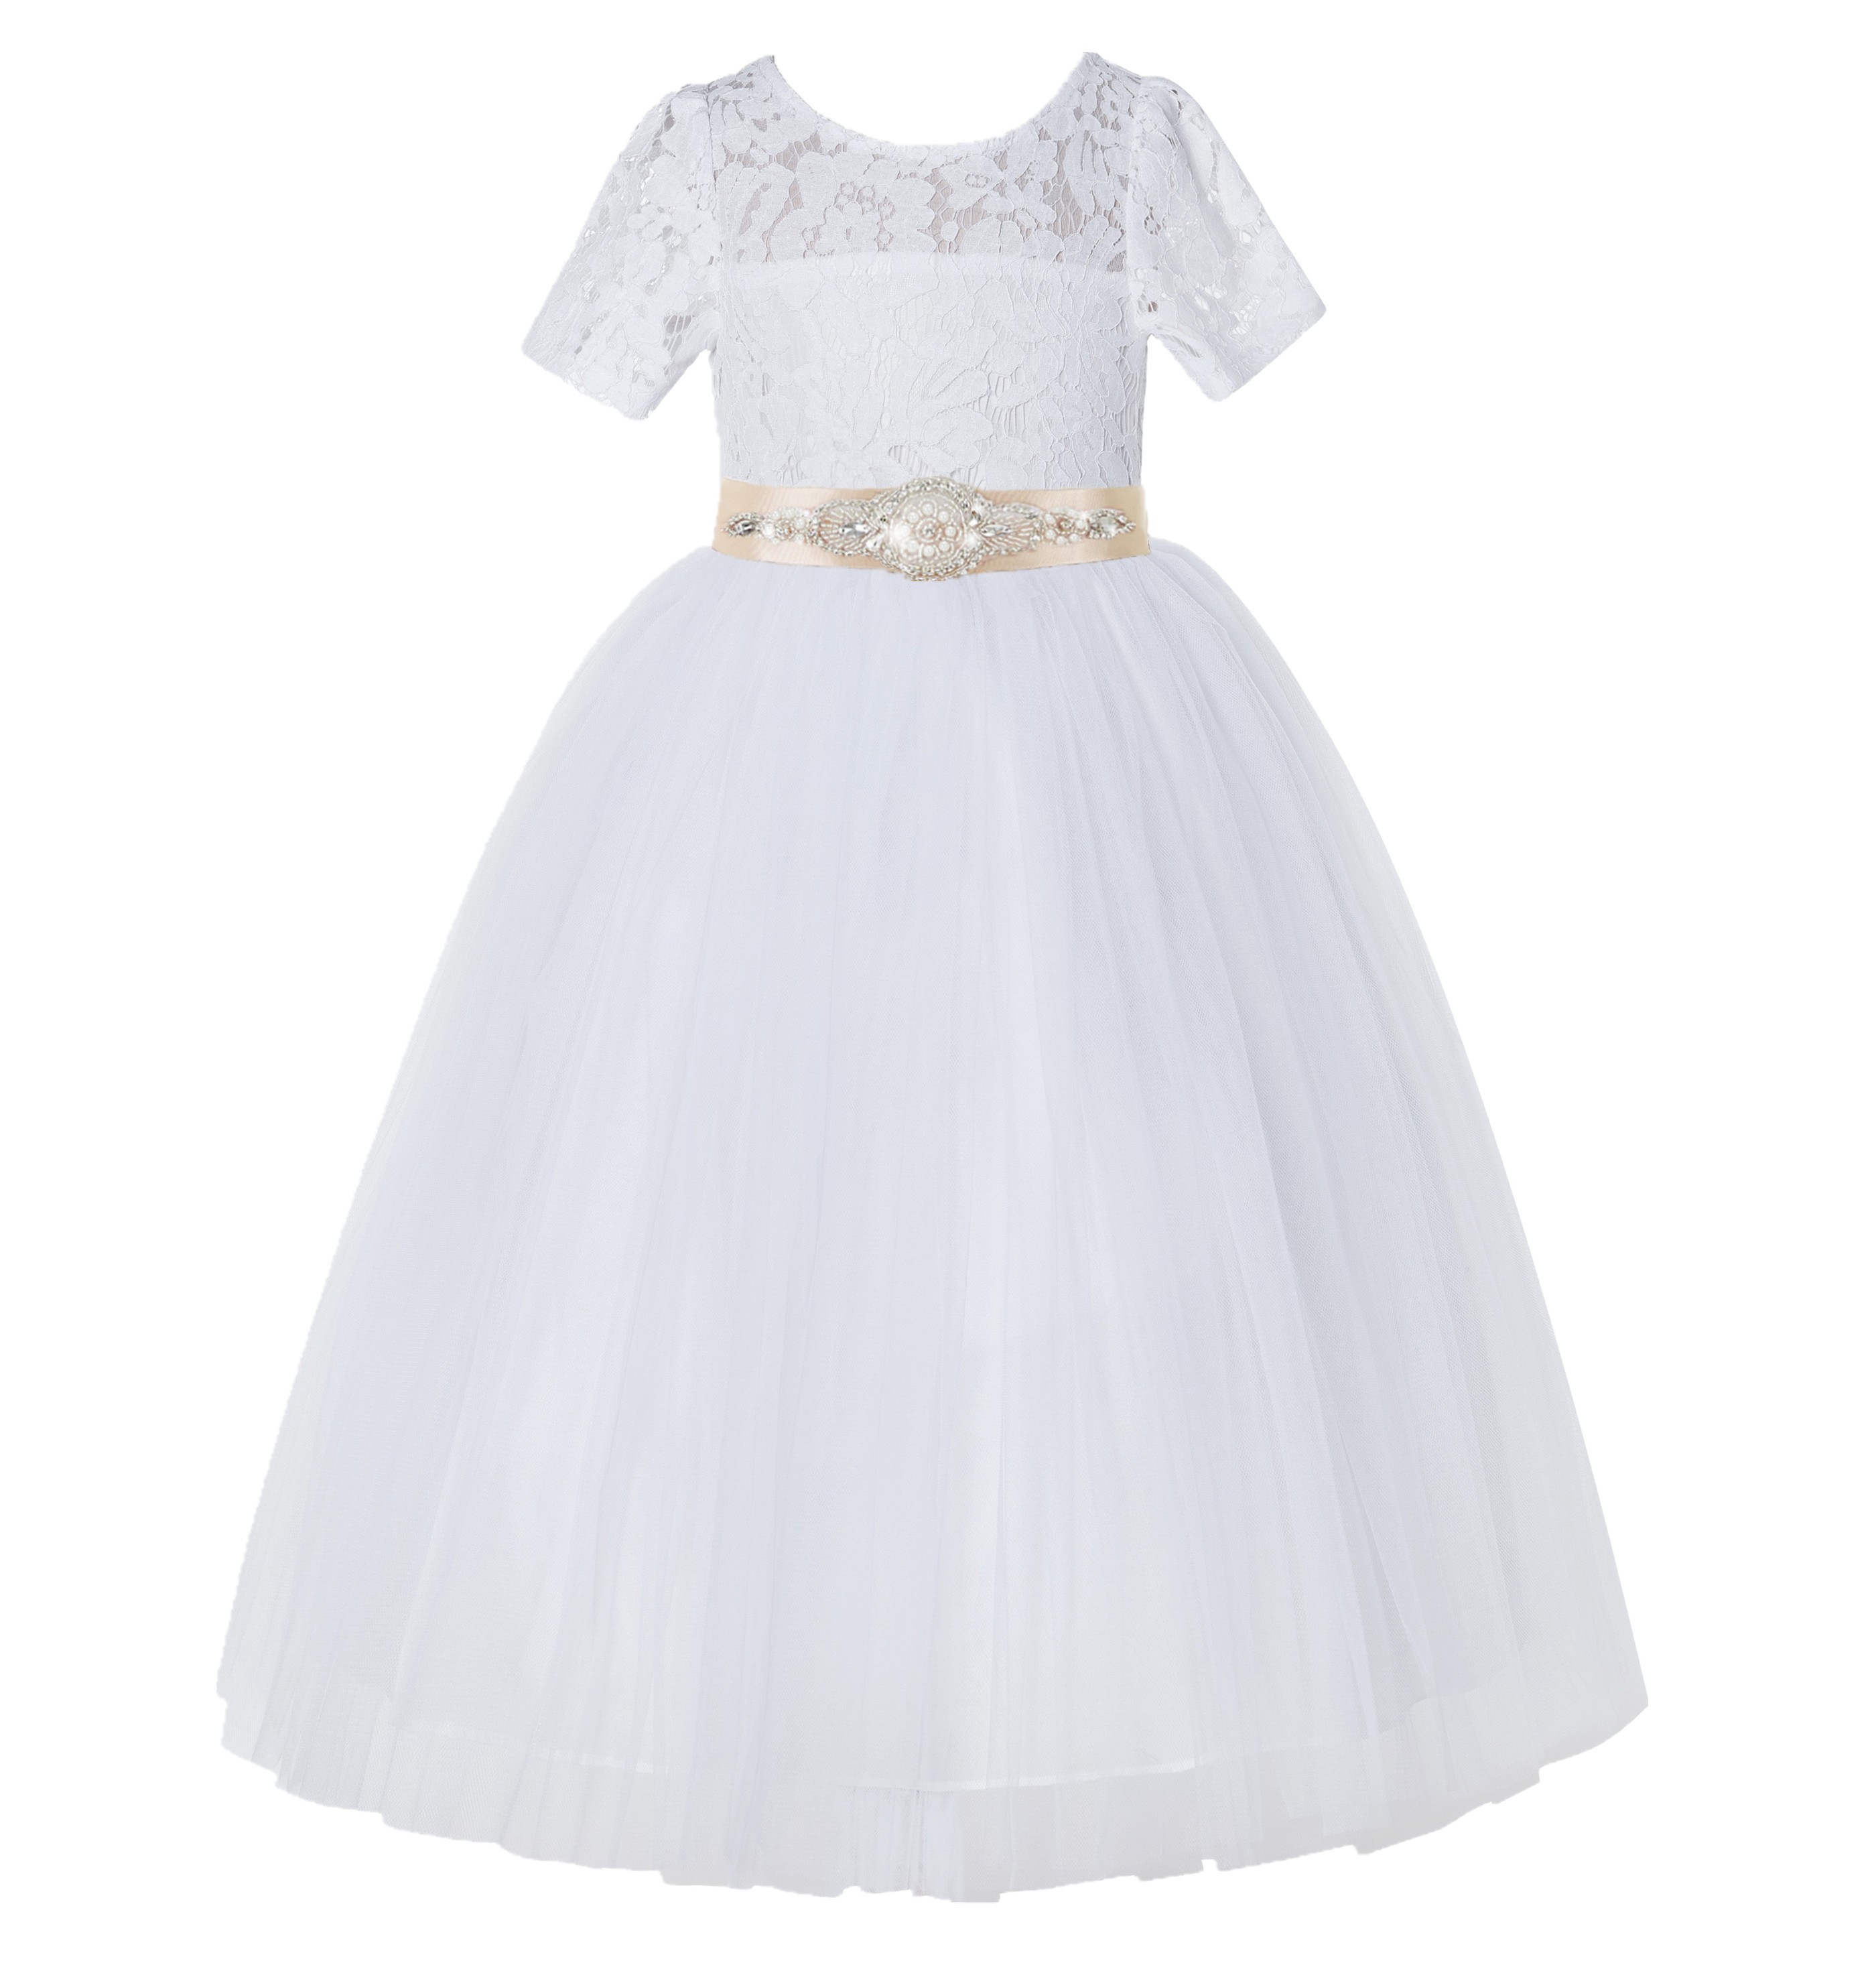 White / Champagne Floral Lace Flower Girl Dress Communion Dress LG2